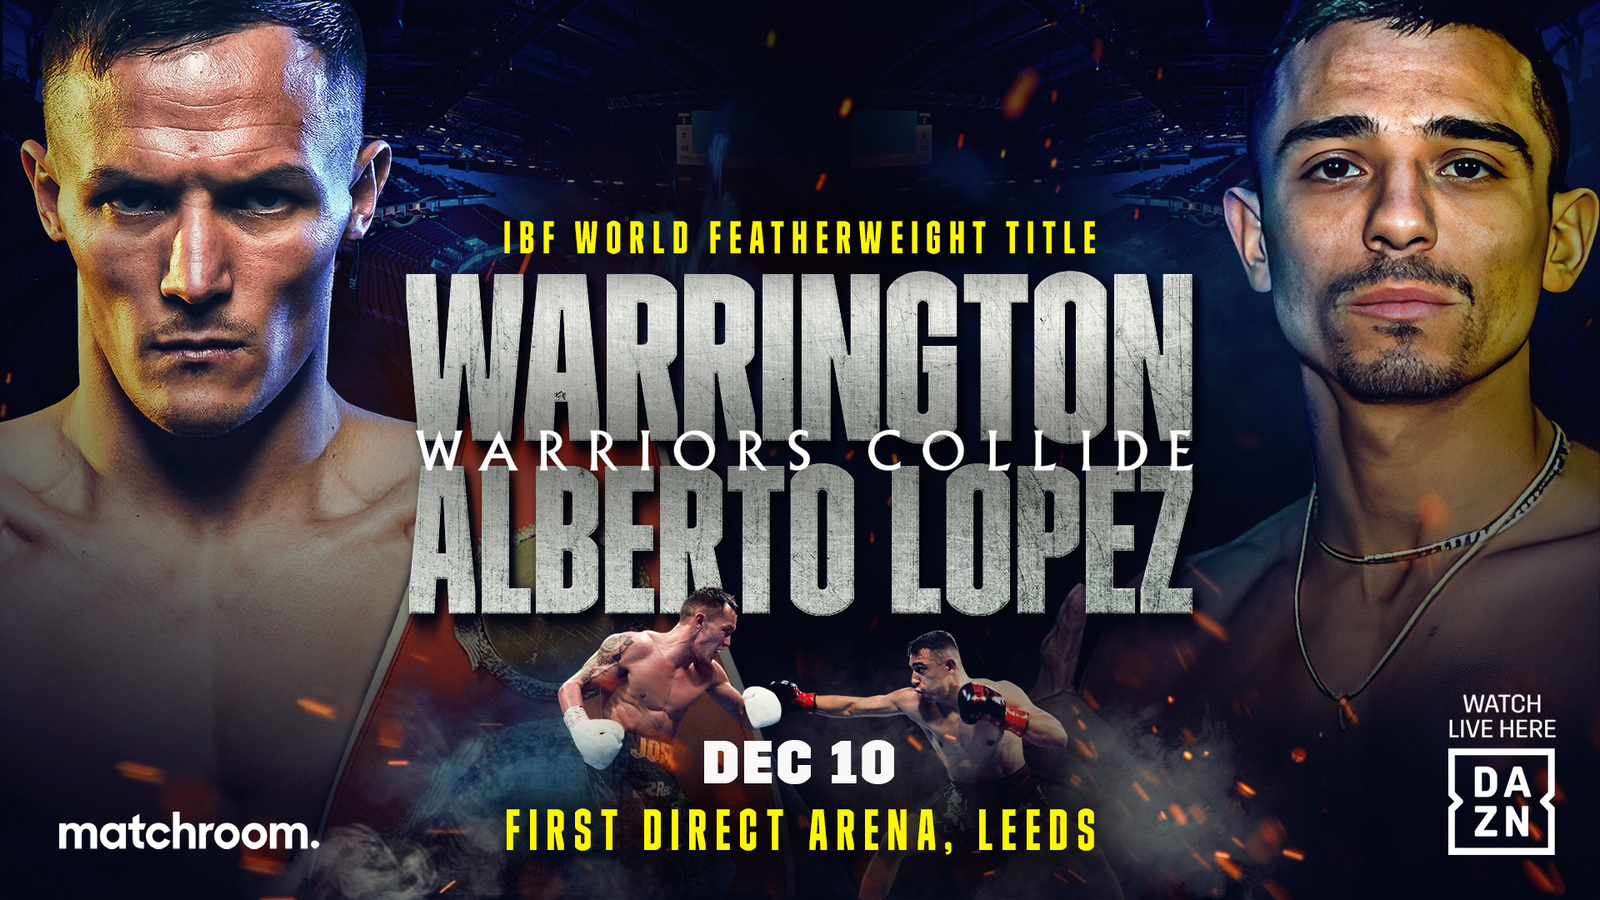 Josh Warrington VS Alberto Lopez Poster IBF Featherweight Boxing Art Print 24x36 - $11.90 - $16.90